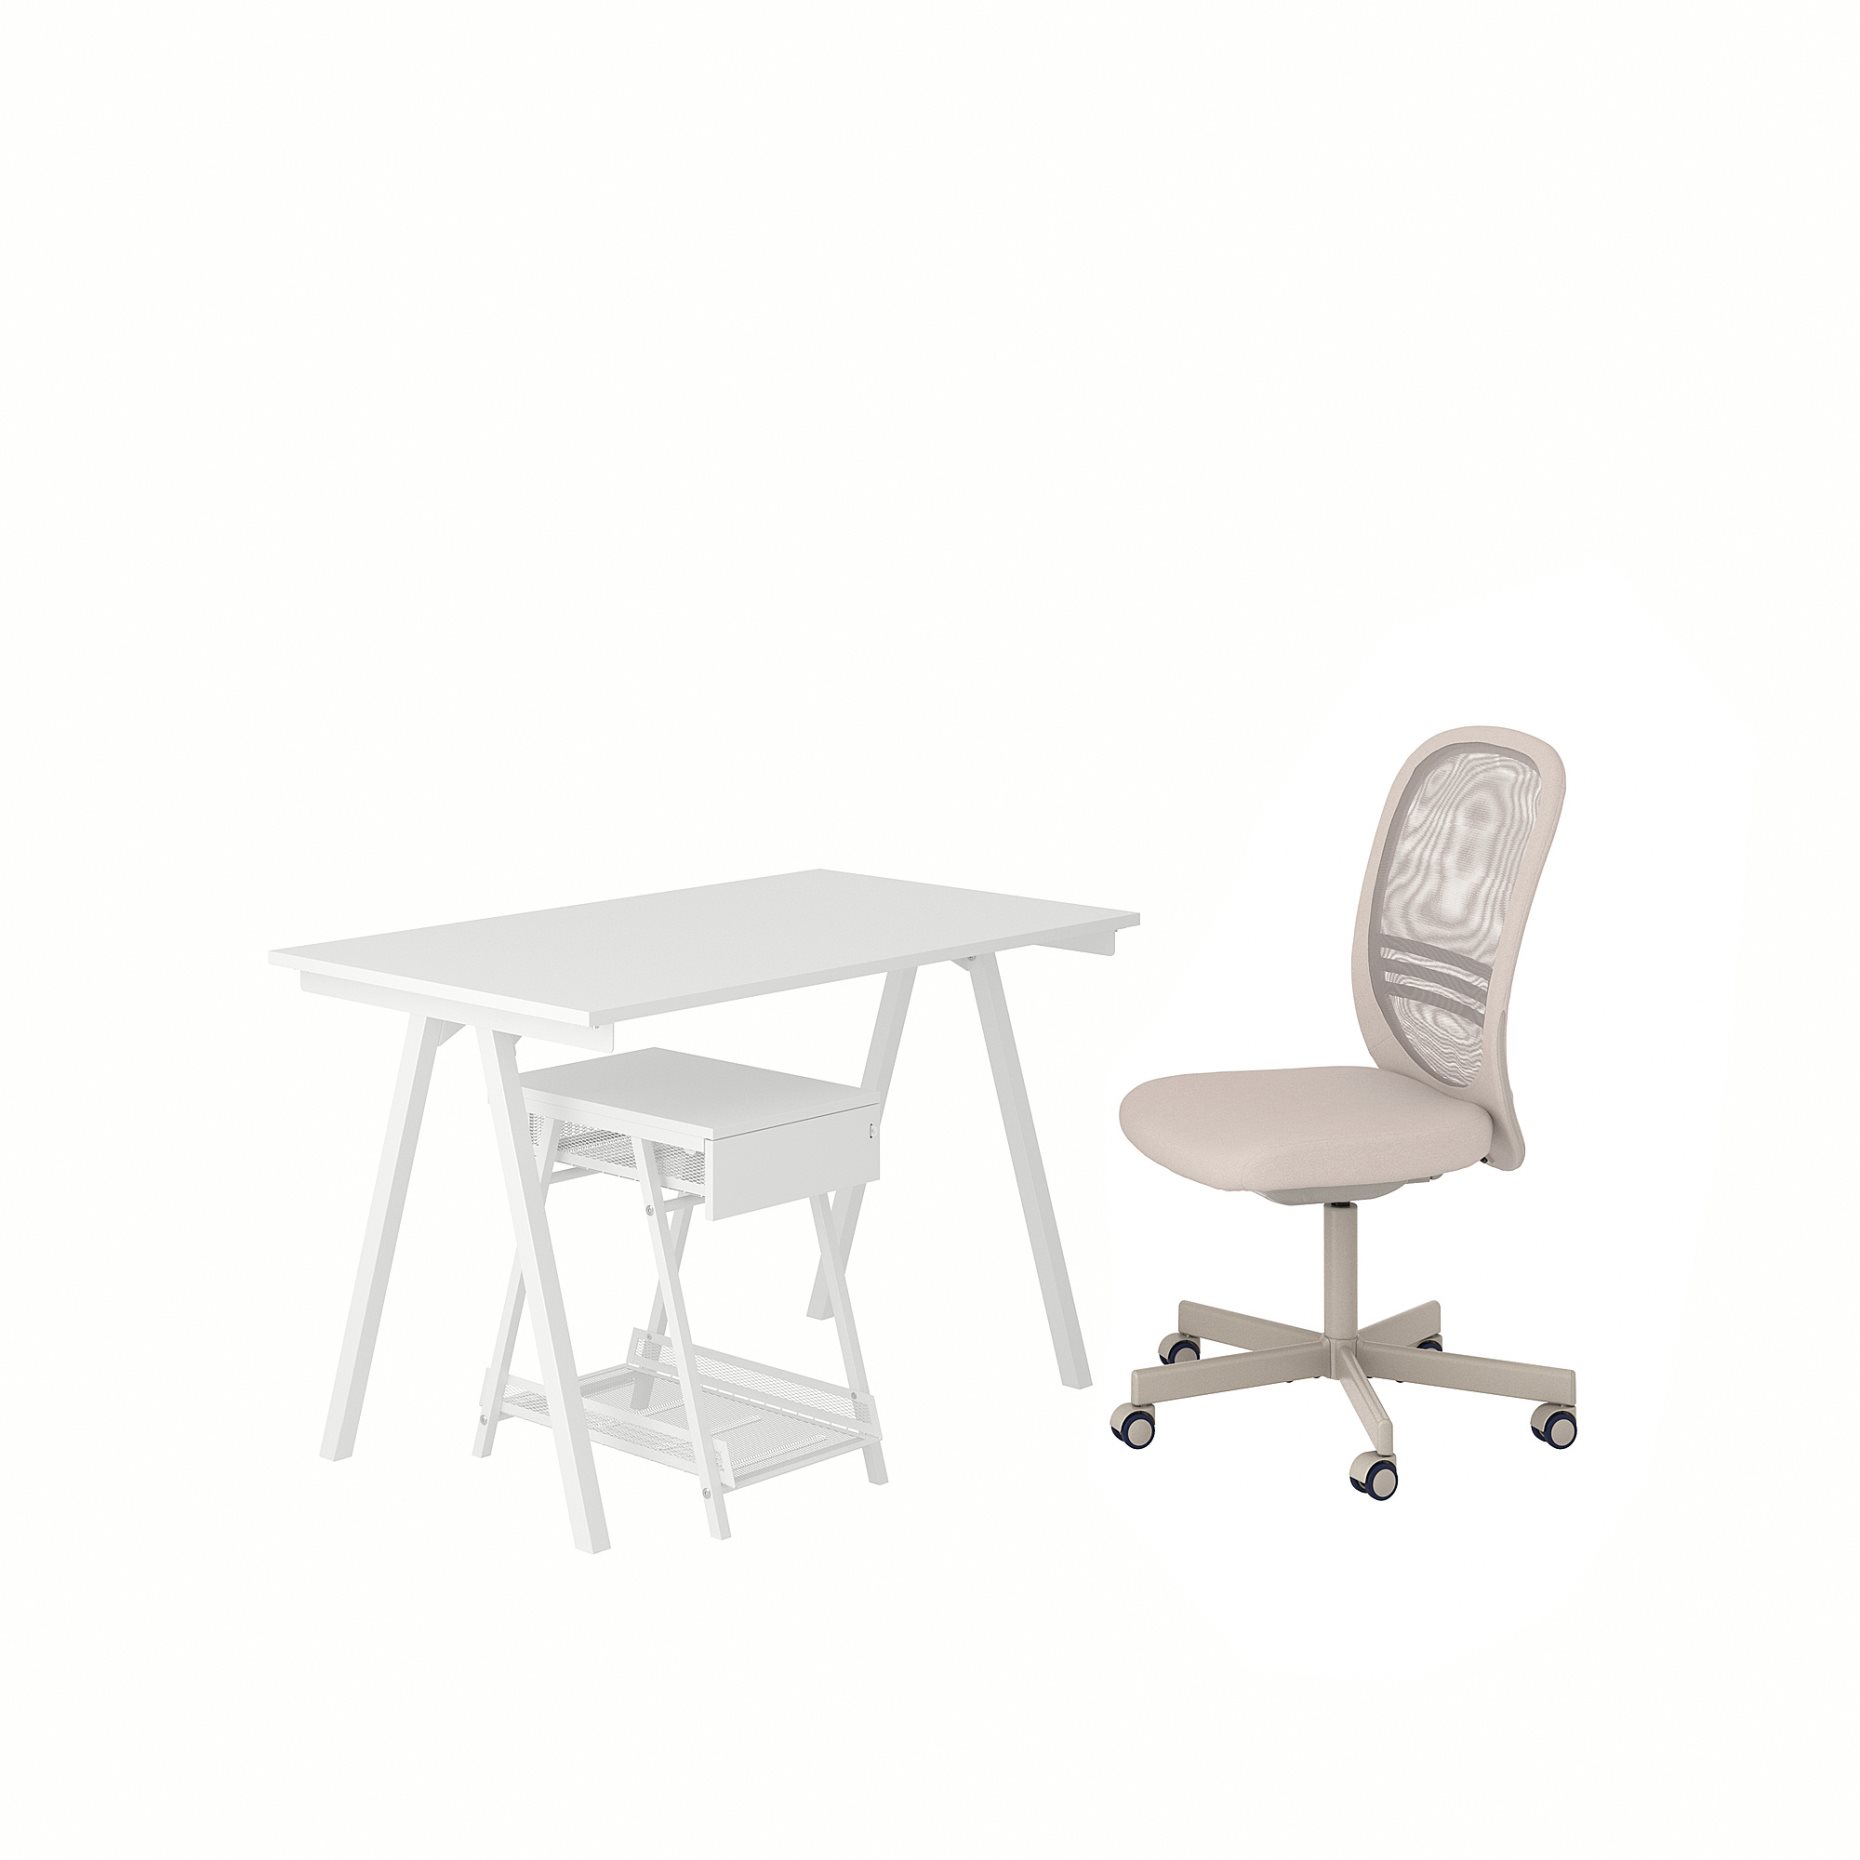 TROTTEN/FLINTAN, desk and storage combination with swivel chair, 594.249.45